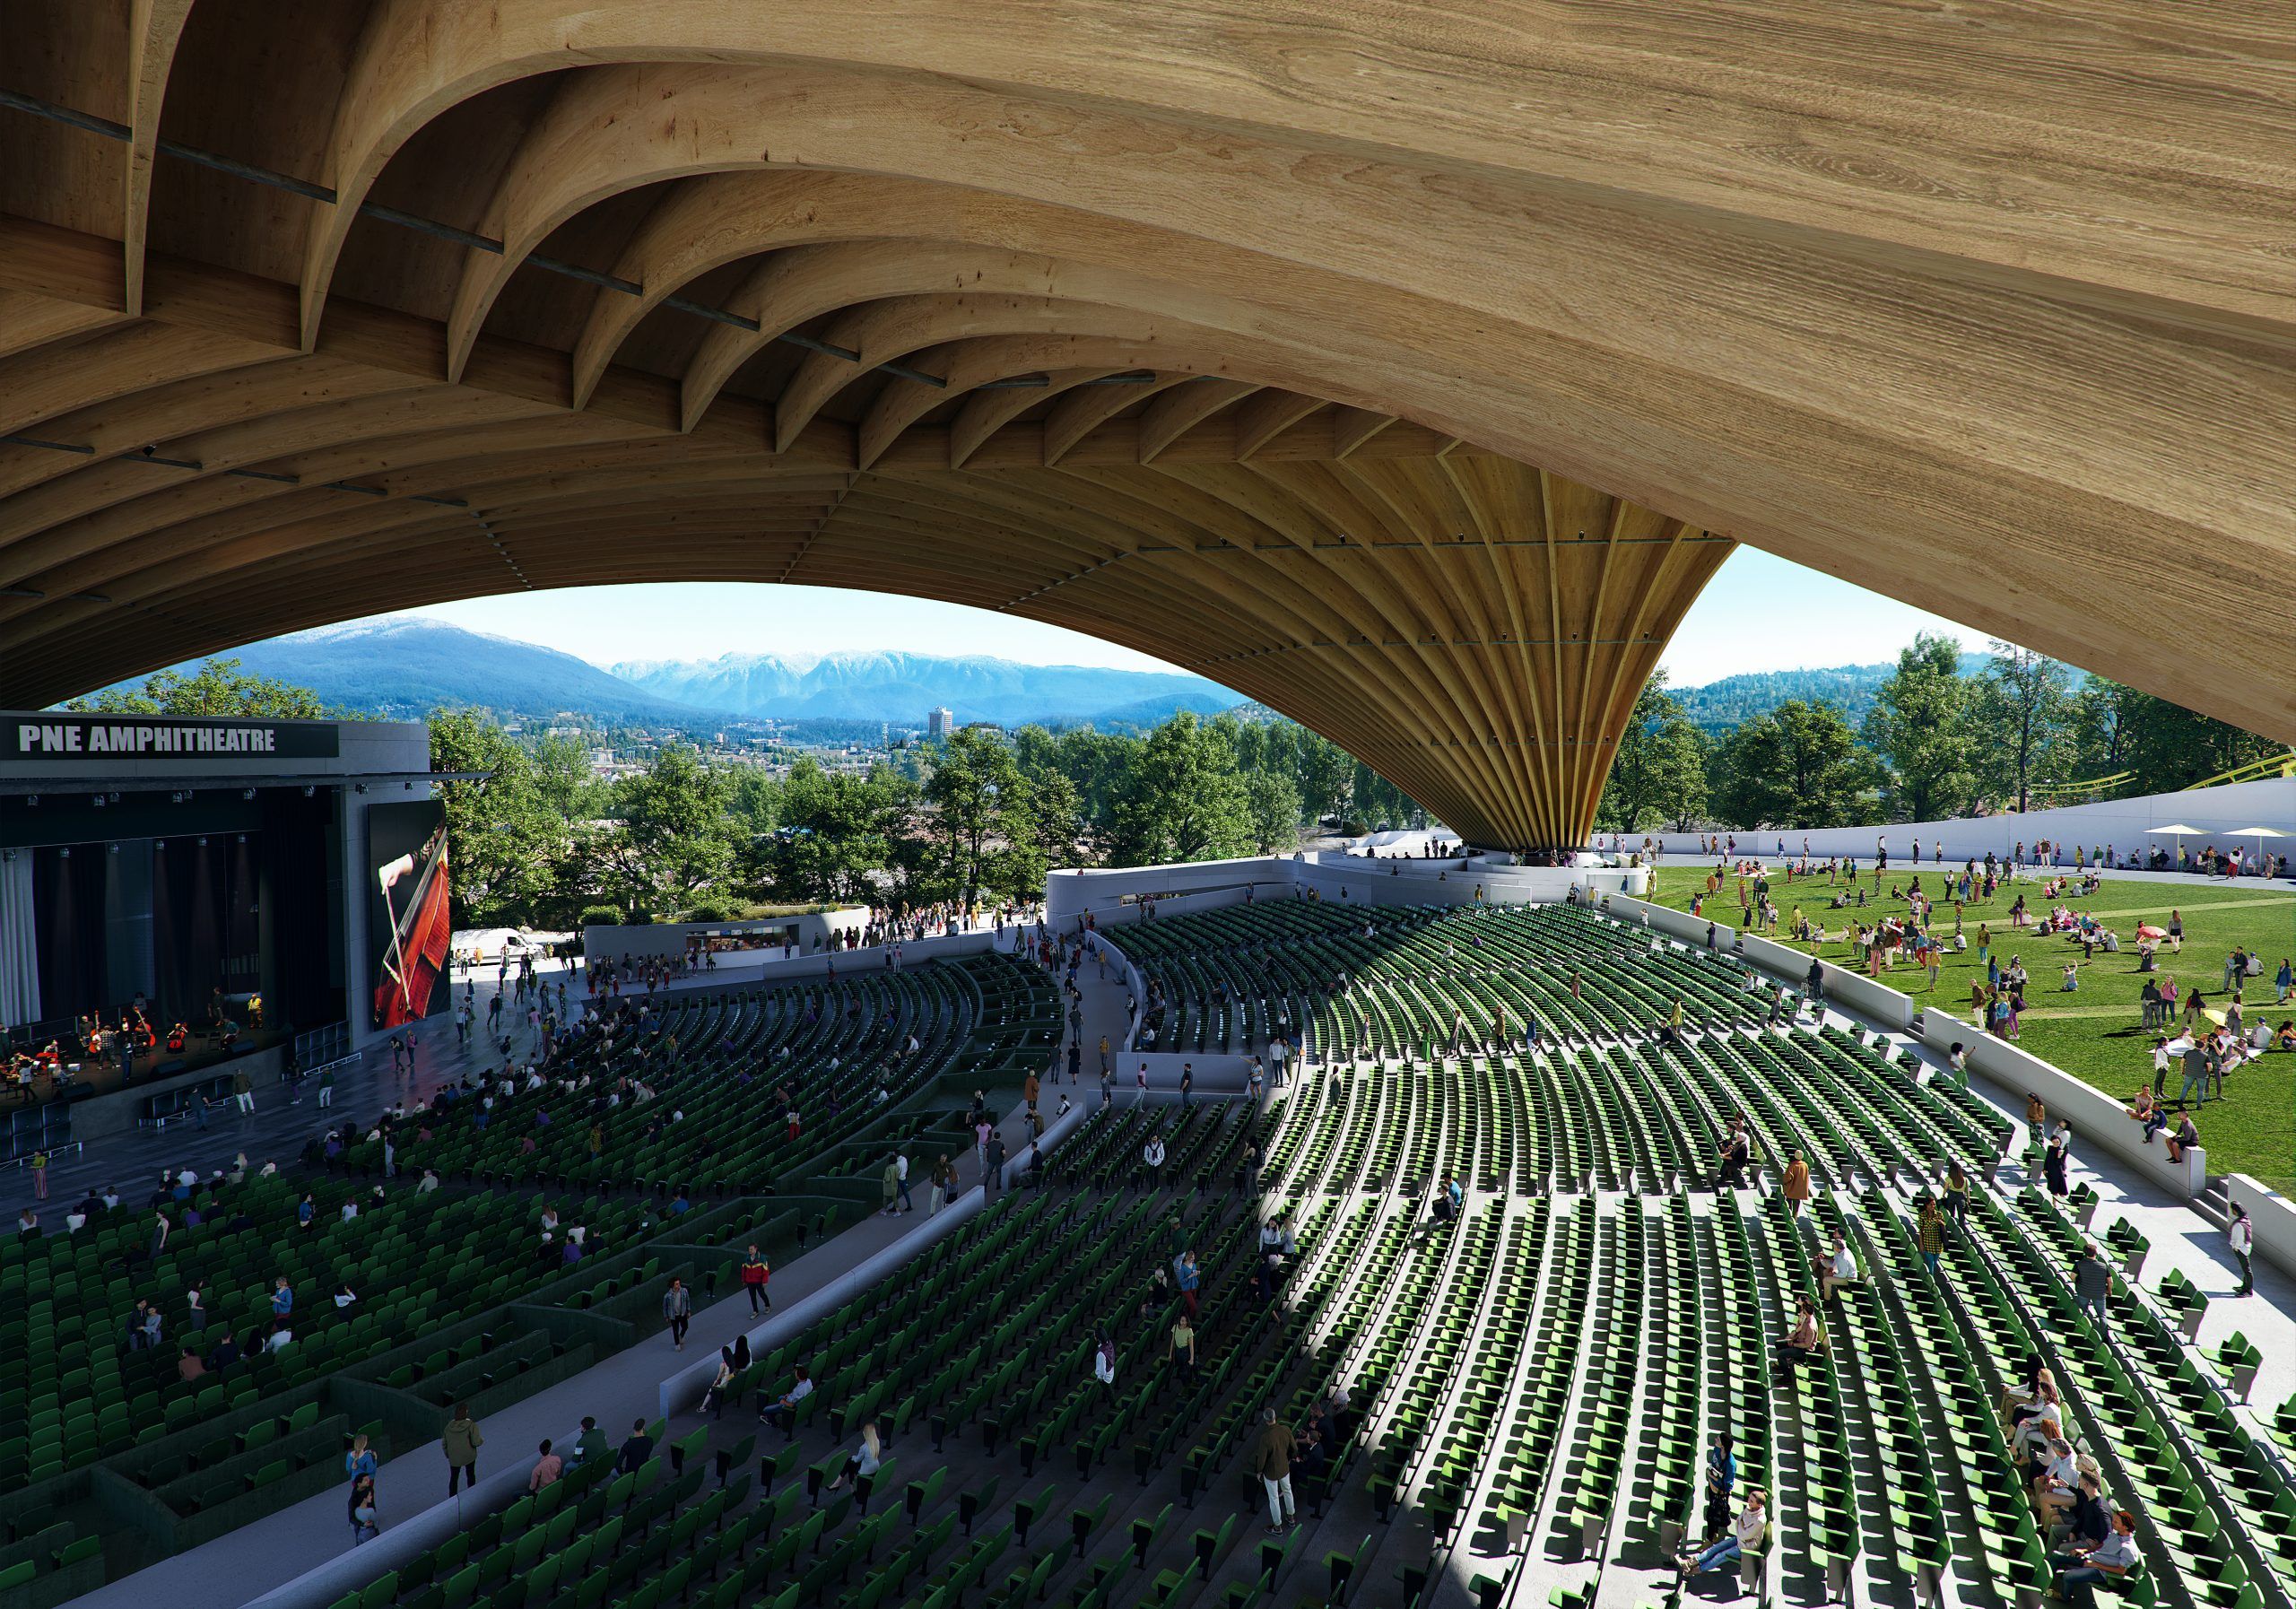 PNE to build 65 million, 10,000 seat outdoor concert venue Vancouver Sun